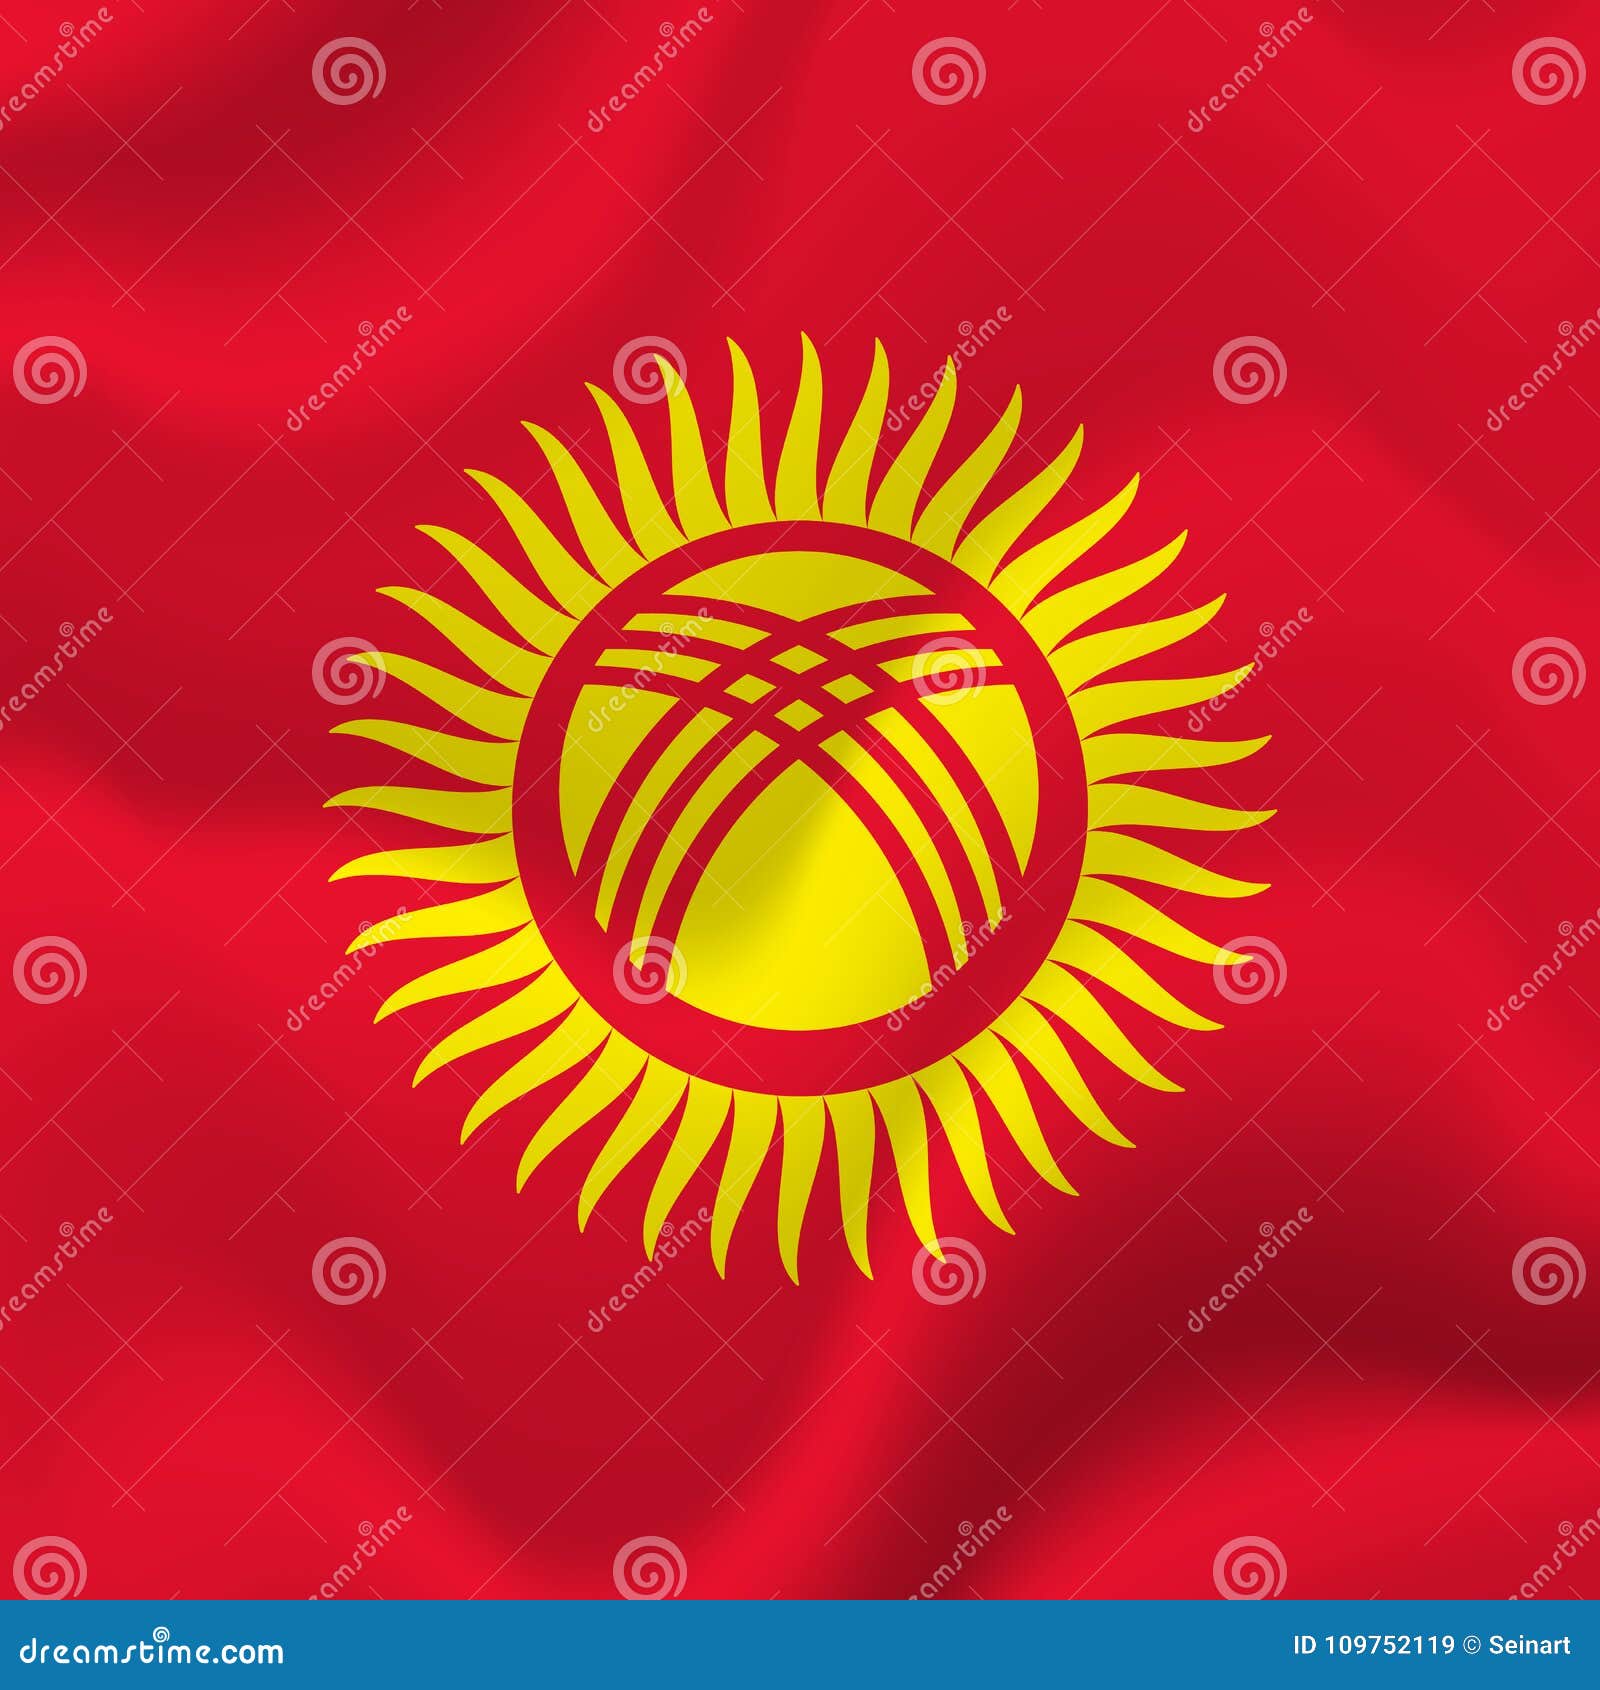 Скачать Фото Кыргызстана Флаг